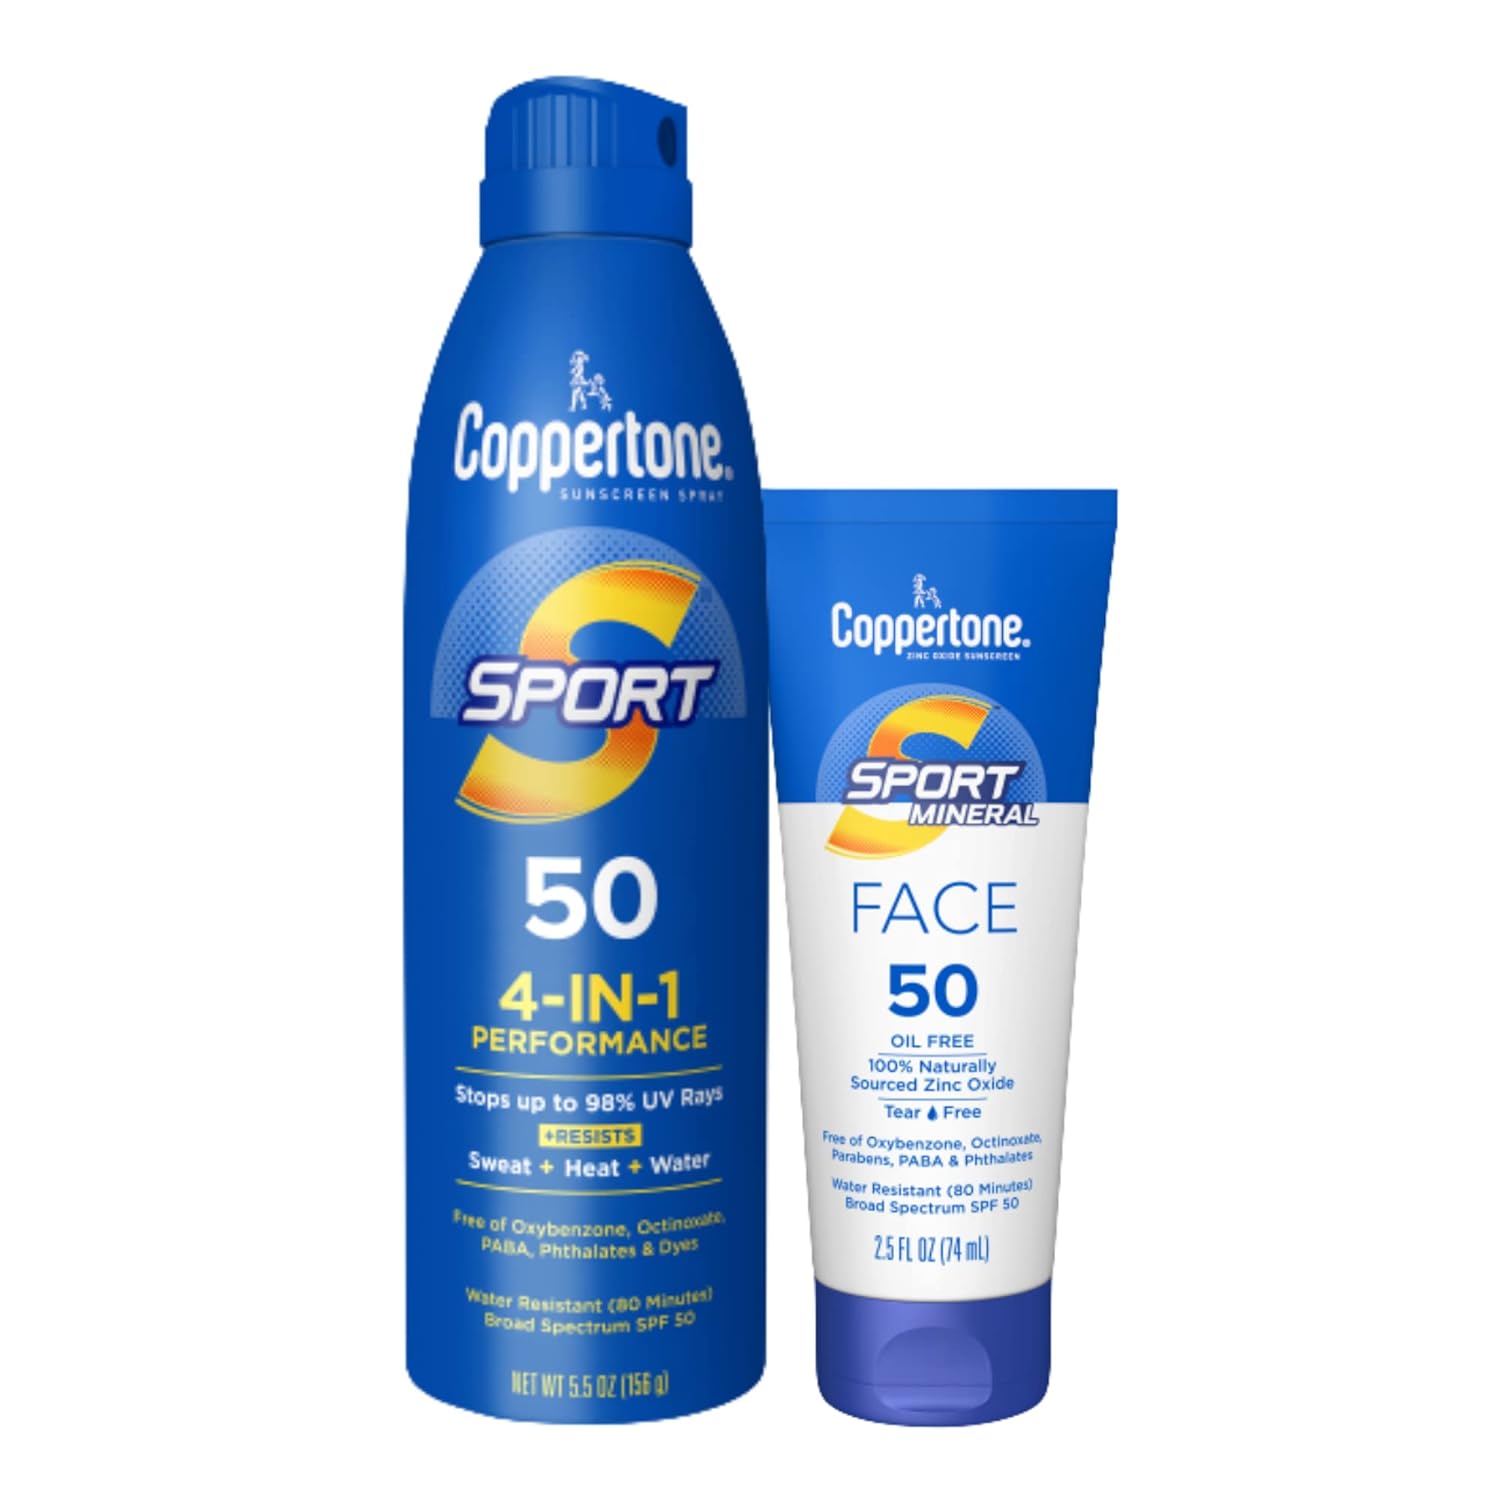 Coppertone SPORT Sunscreen Spray + Face Sunscreen SPF 50, Water Resistant Sunscreen Pack, Spray Sunscreen and Facial Sunscreen Lotion (5.5 Oz Spray + 2.5 Fl Oz Tube Bundle)